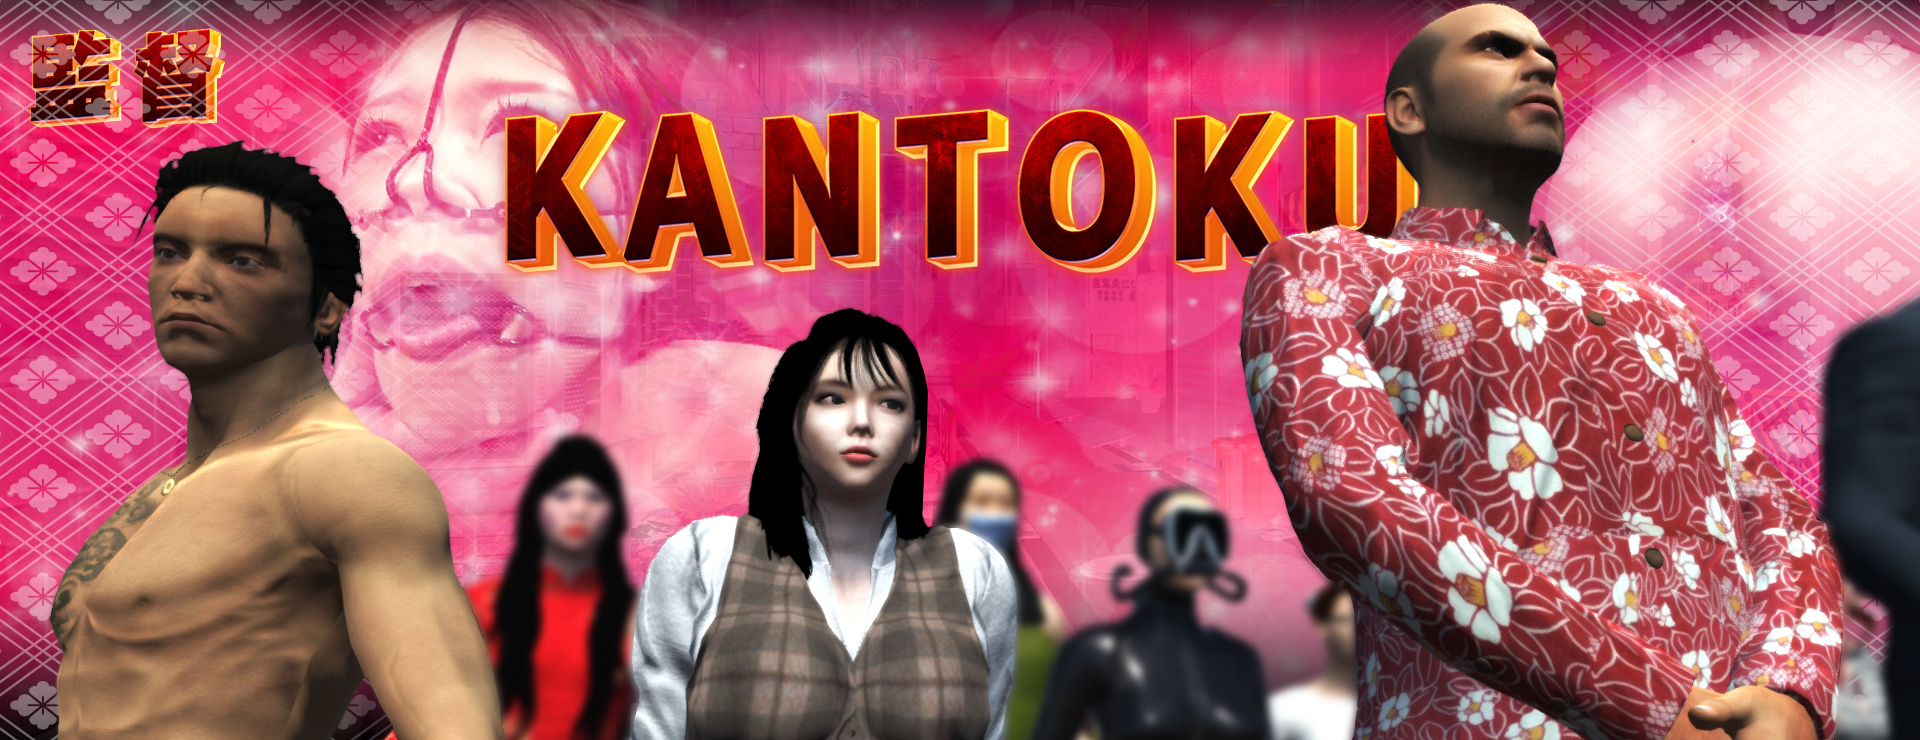 Kantoku - Action Adventure Spiel